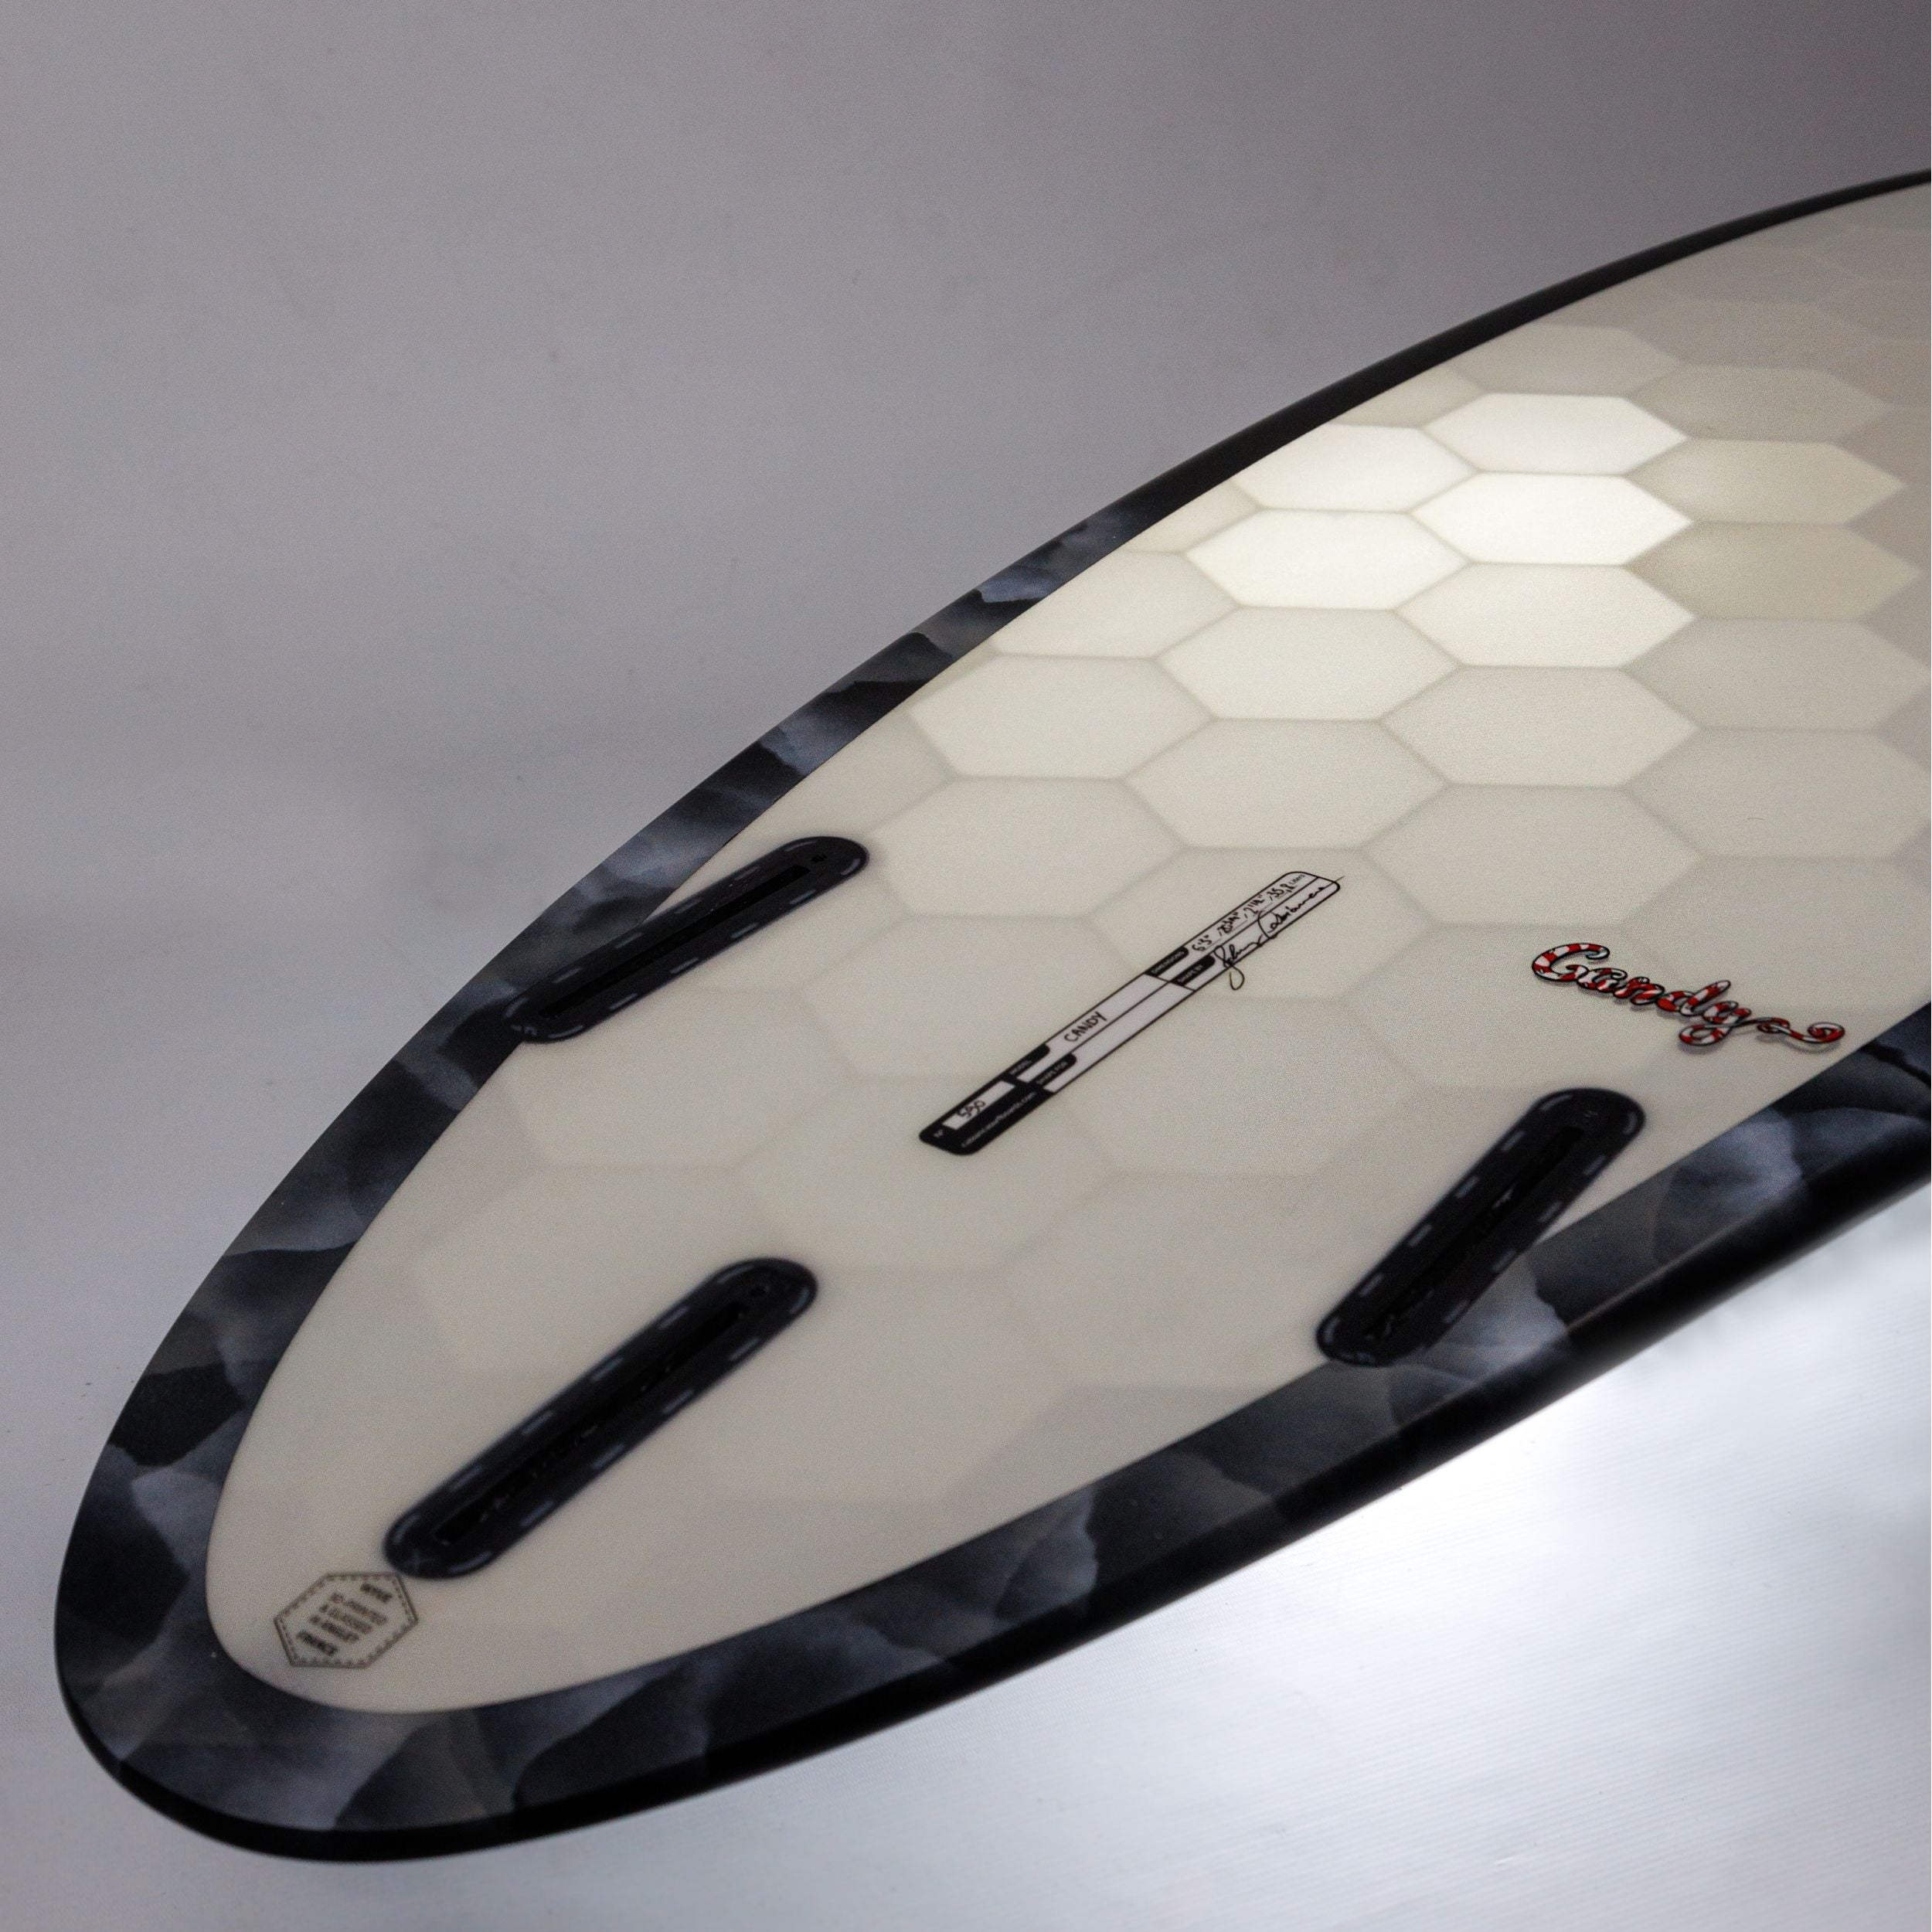 Planche de surf made in France avec une configuration Thruster